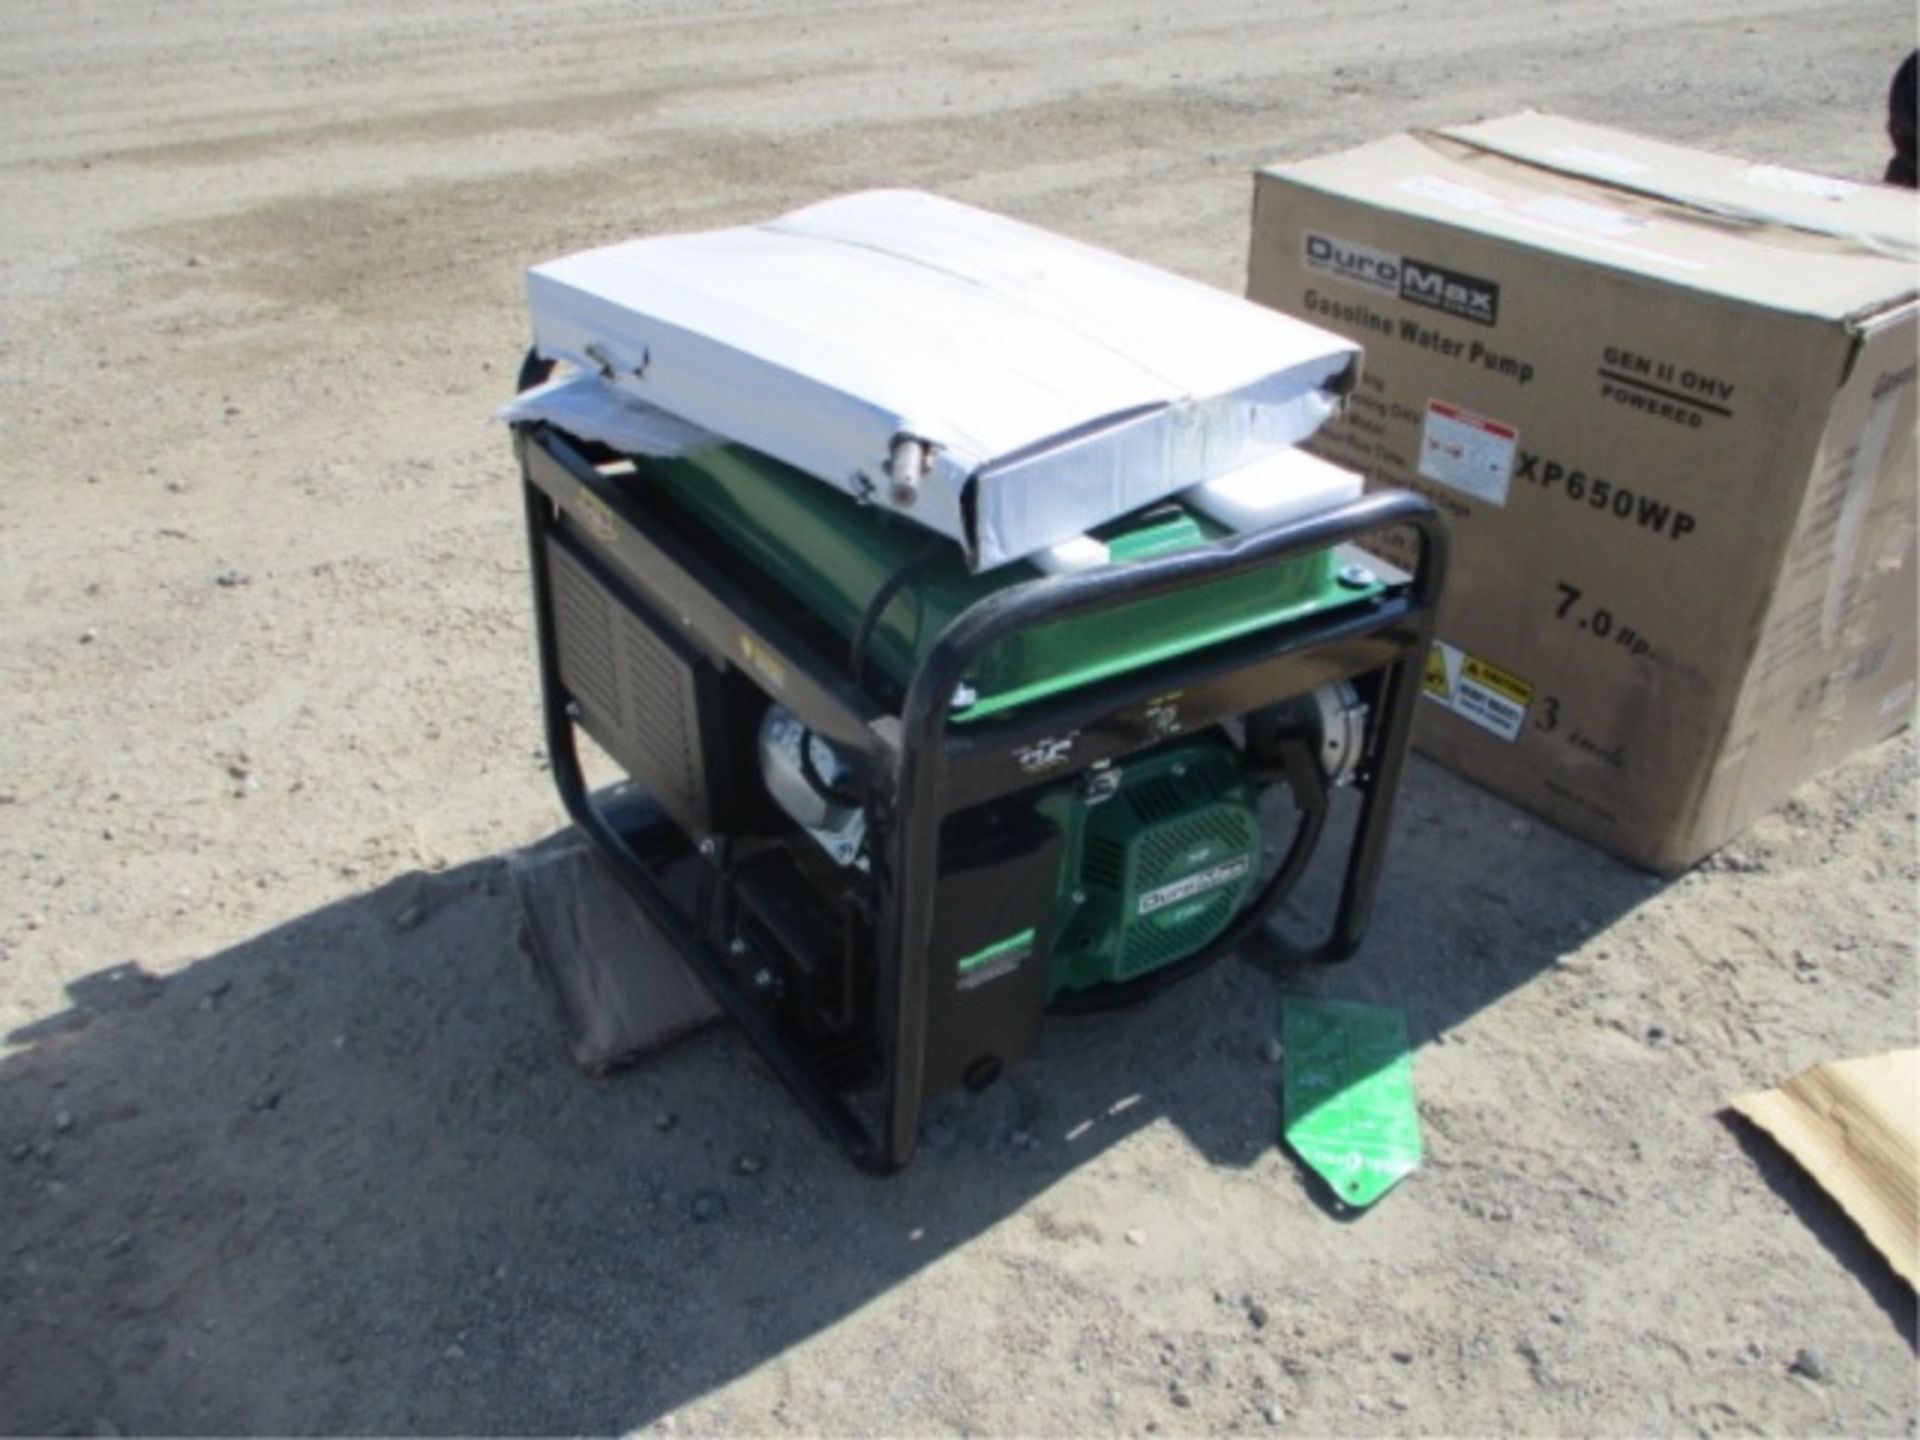 Duromax XP4850EH Hybrid Generator, 4,850 Watts, Dual Fuel - Image 5 of 8